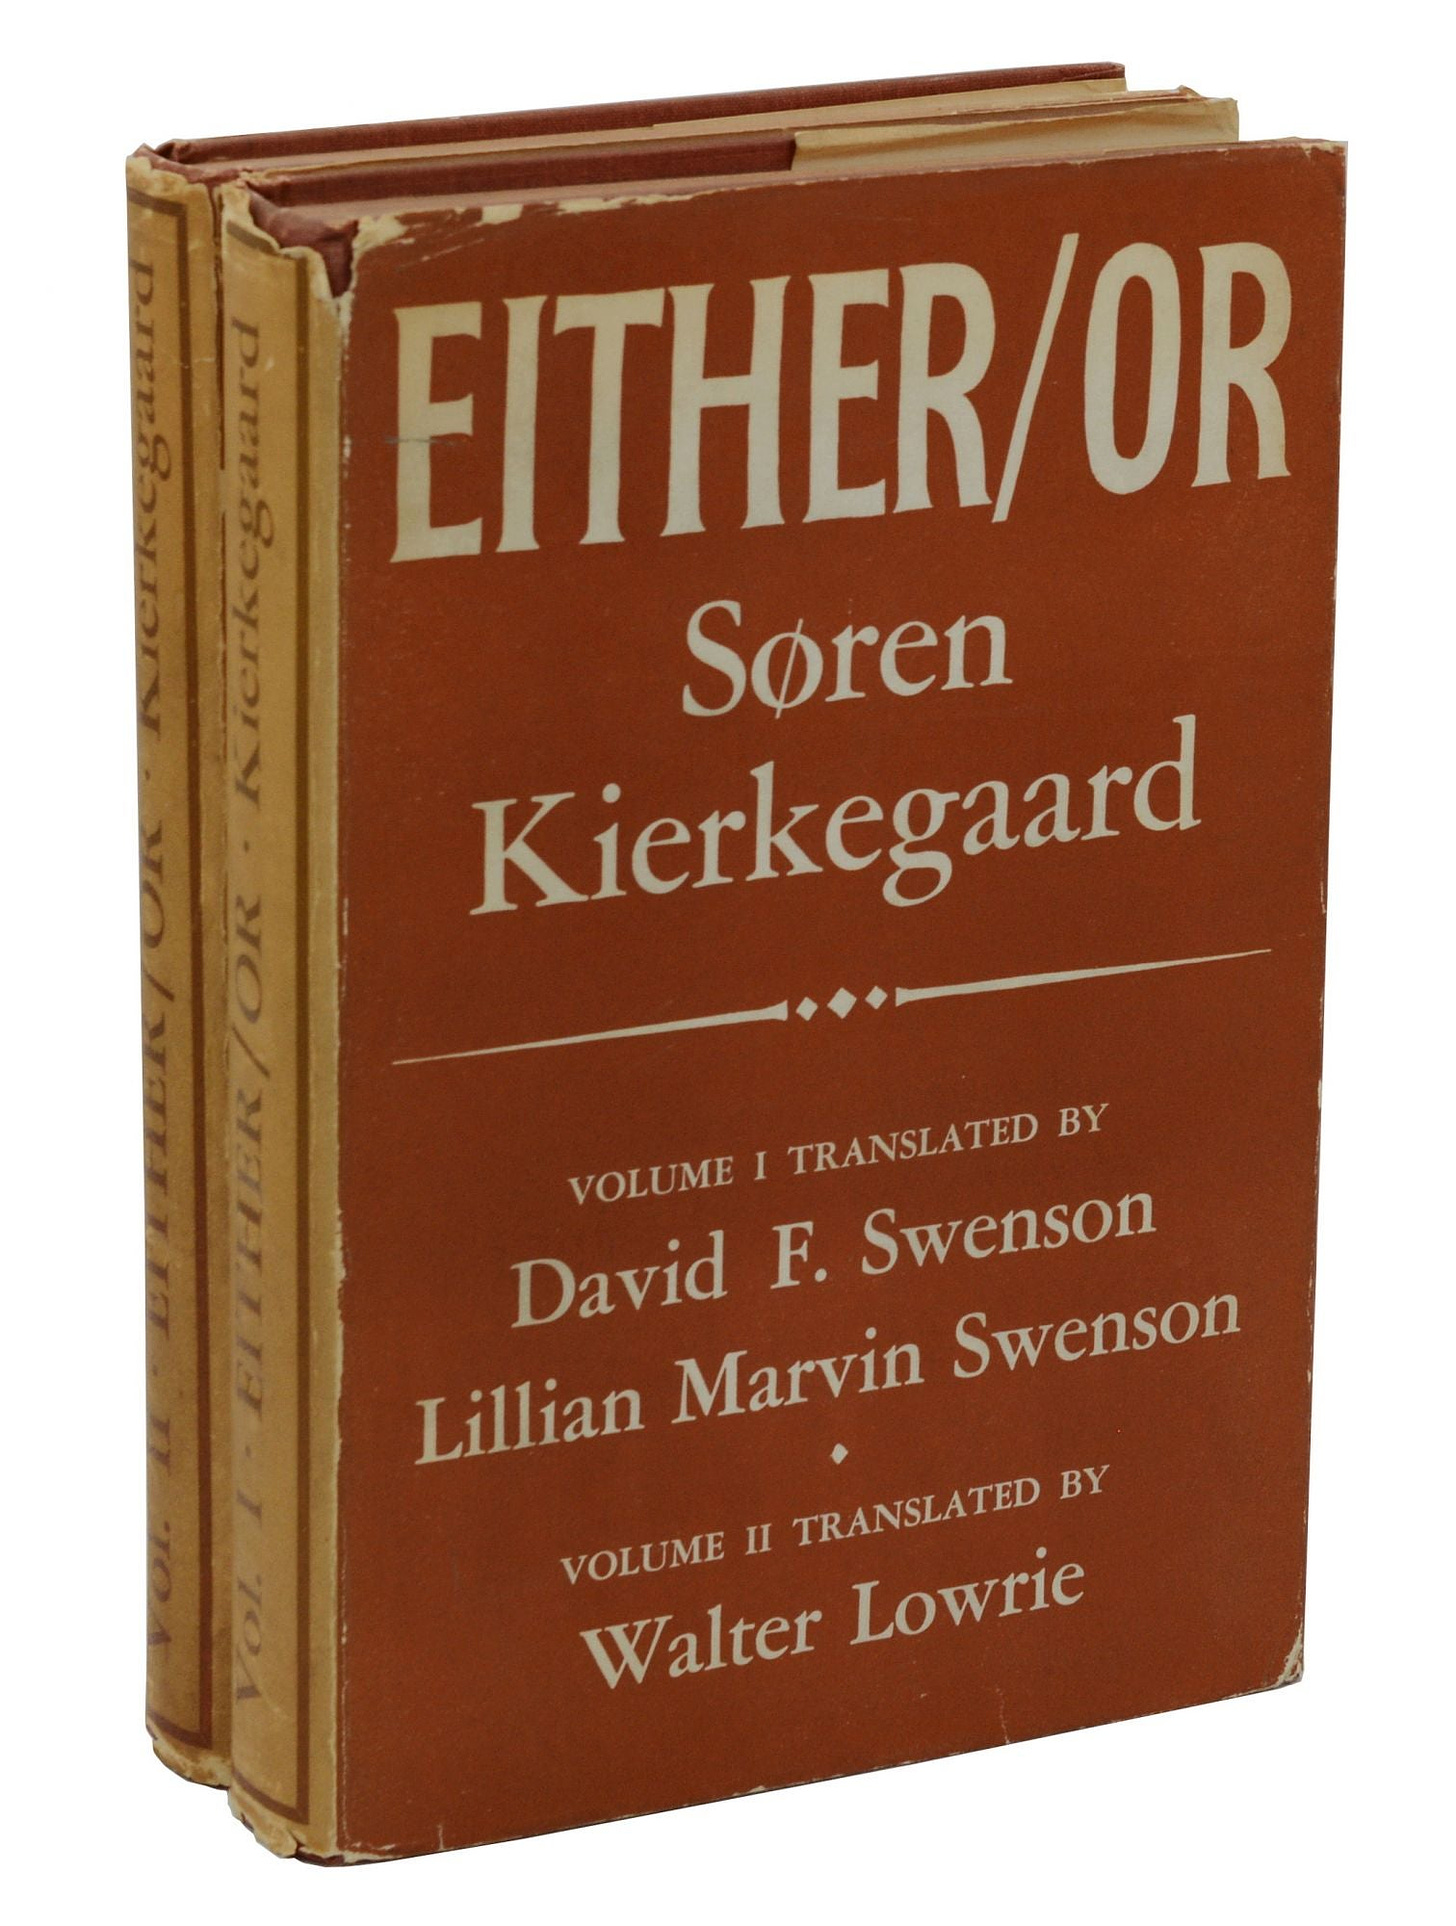 Either / Or | Soren Kierkegaard, David F. Swenson, Lillian Marvin Swenson |  First American Edition